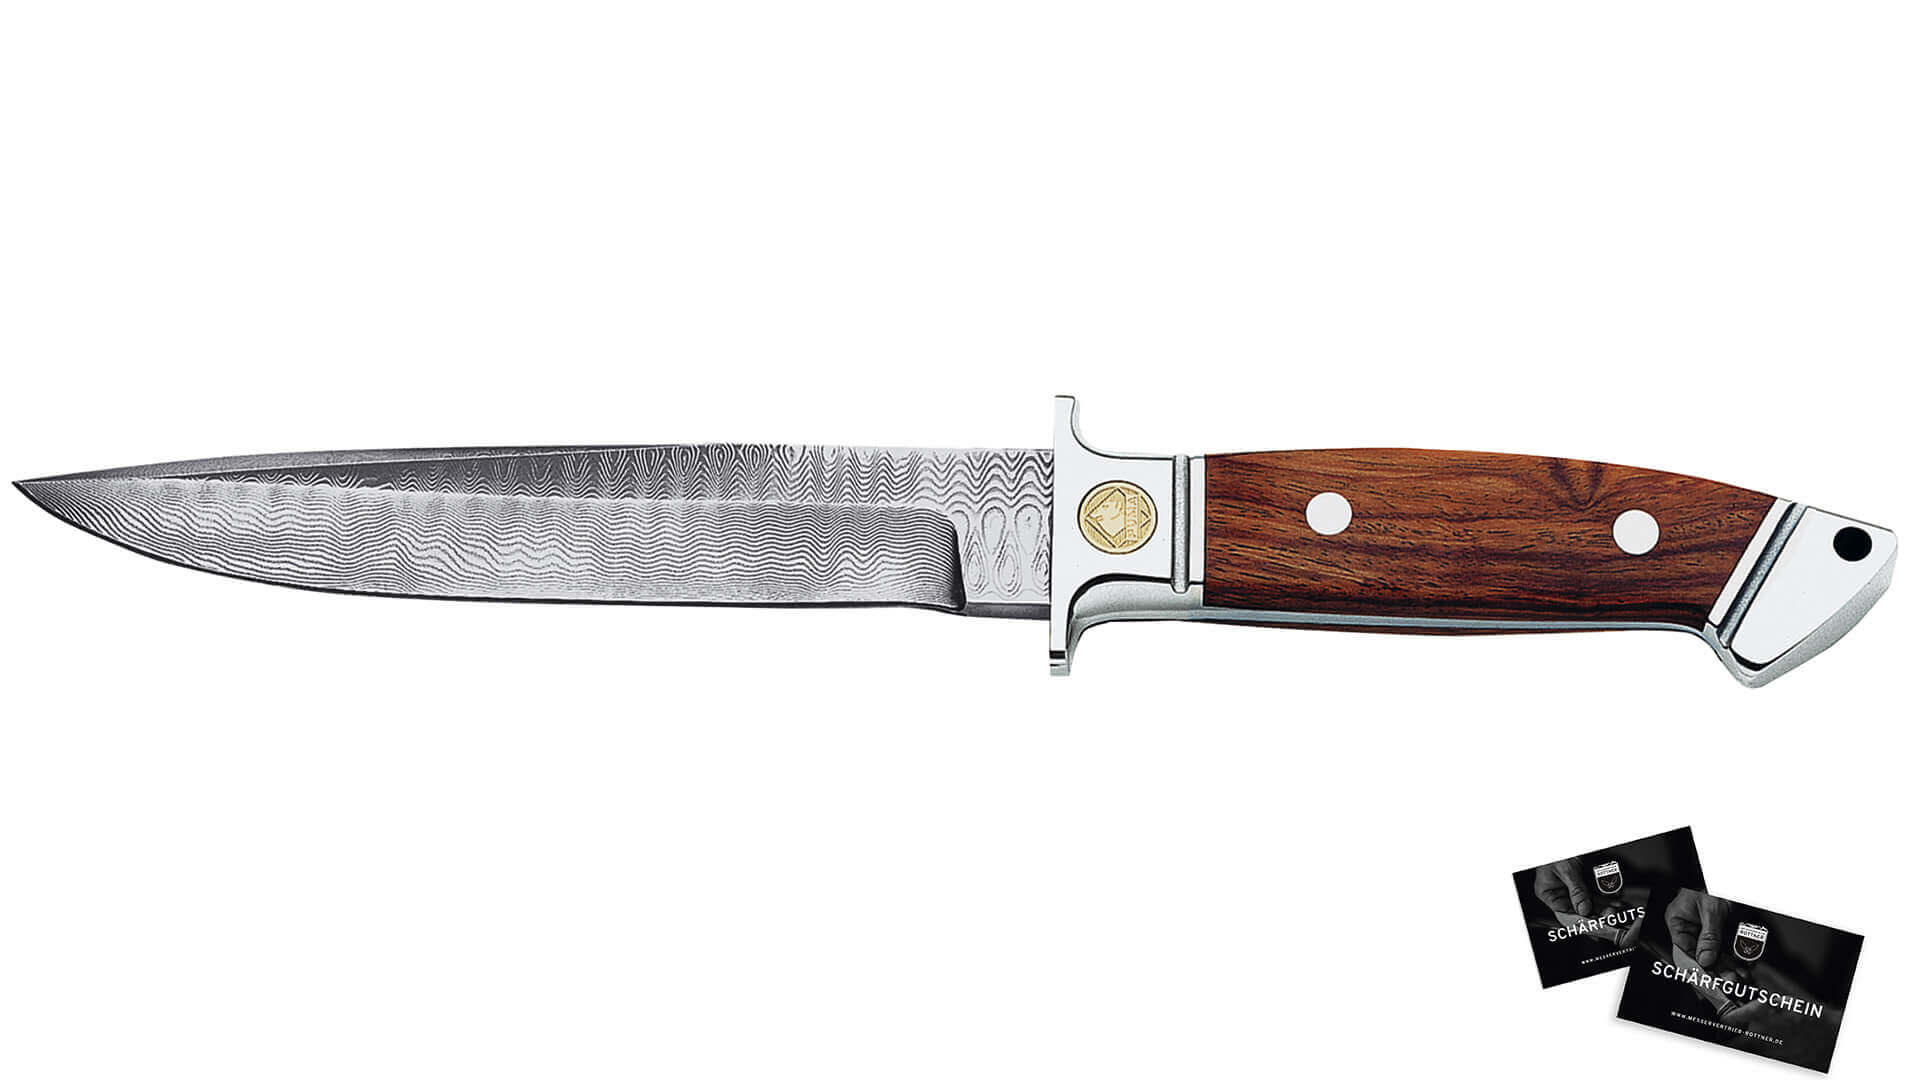 puma-cougar-damask-damask-knife-hunting knife-collector's knife